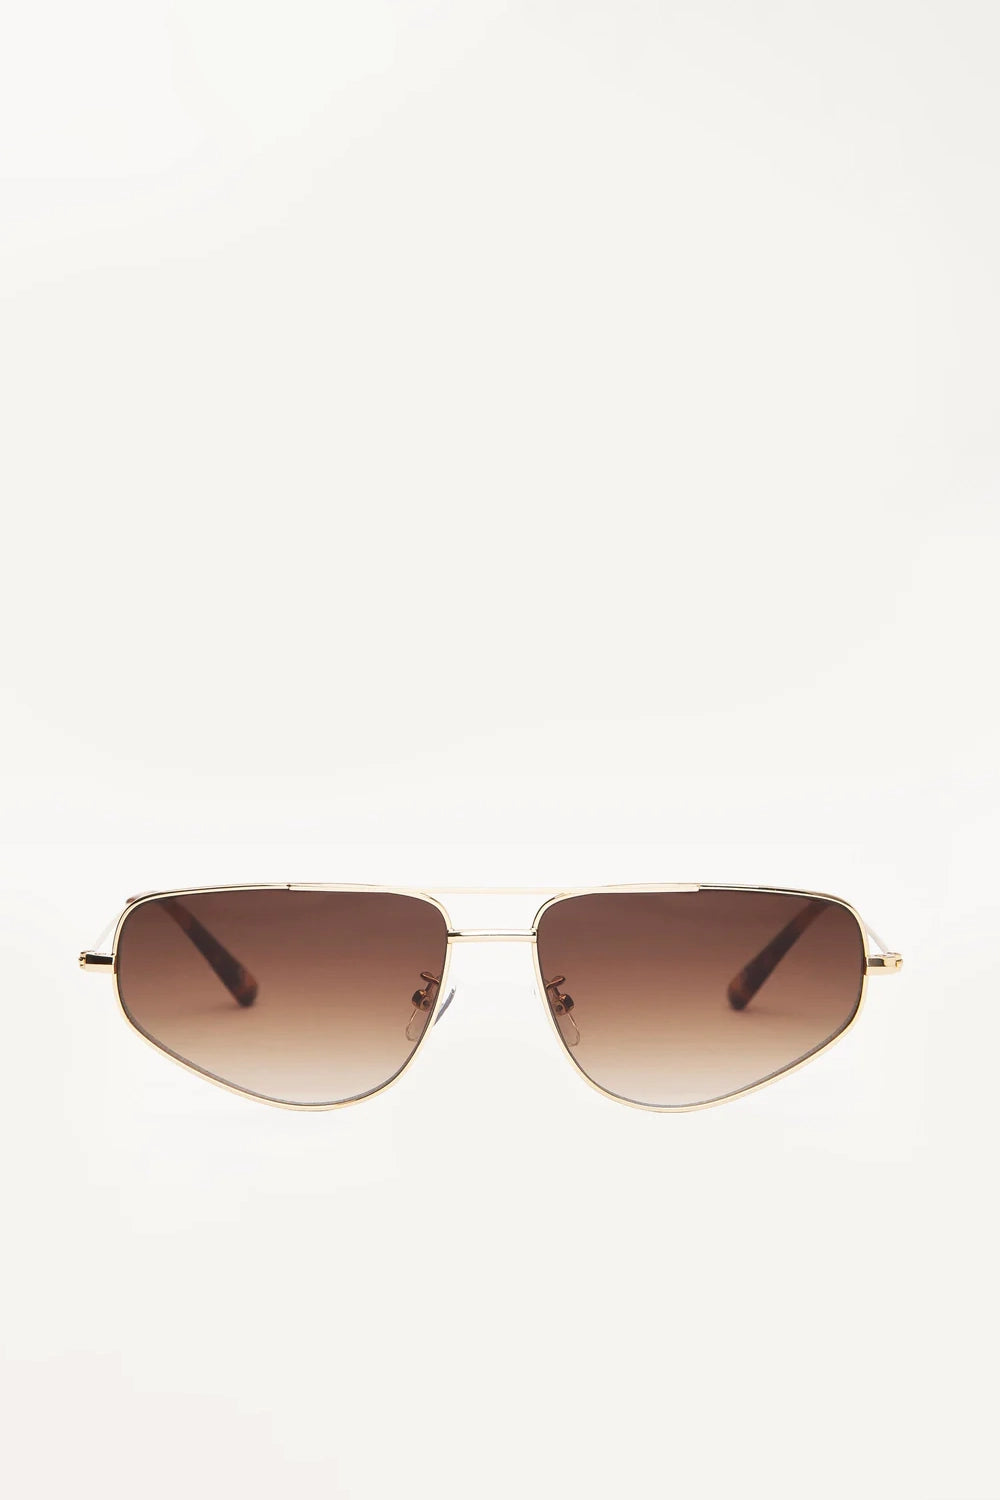 Pepa Capri Dark Sunglasses